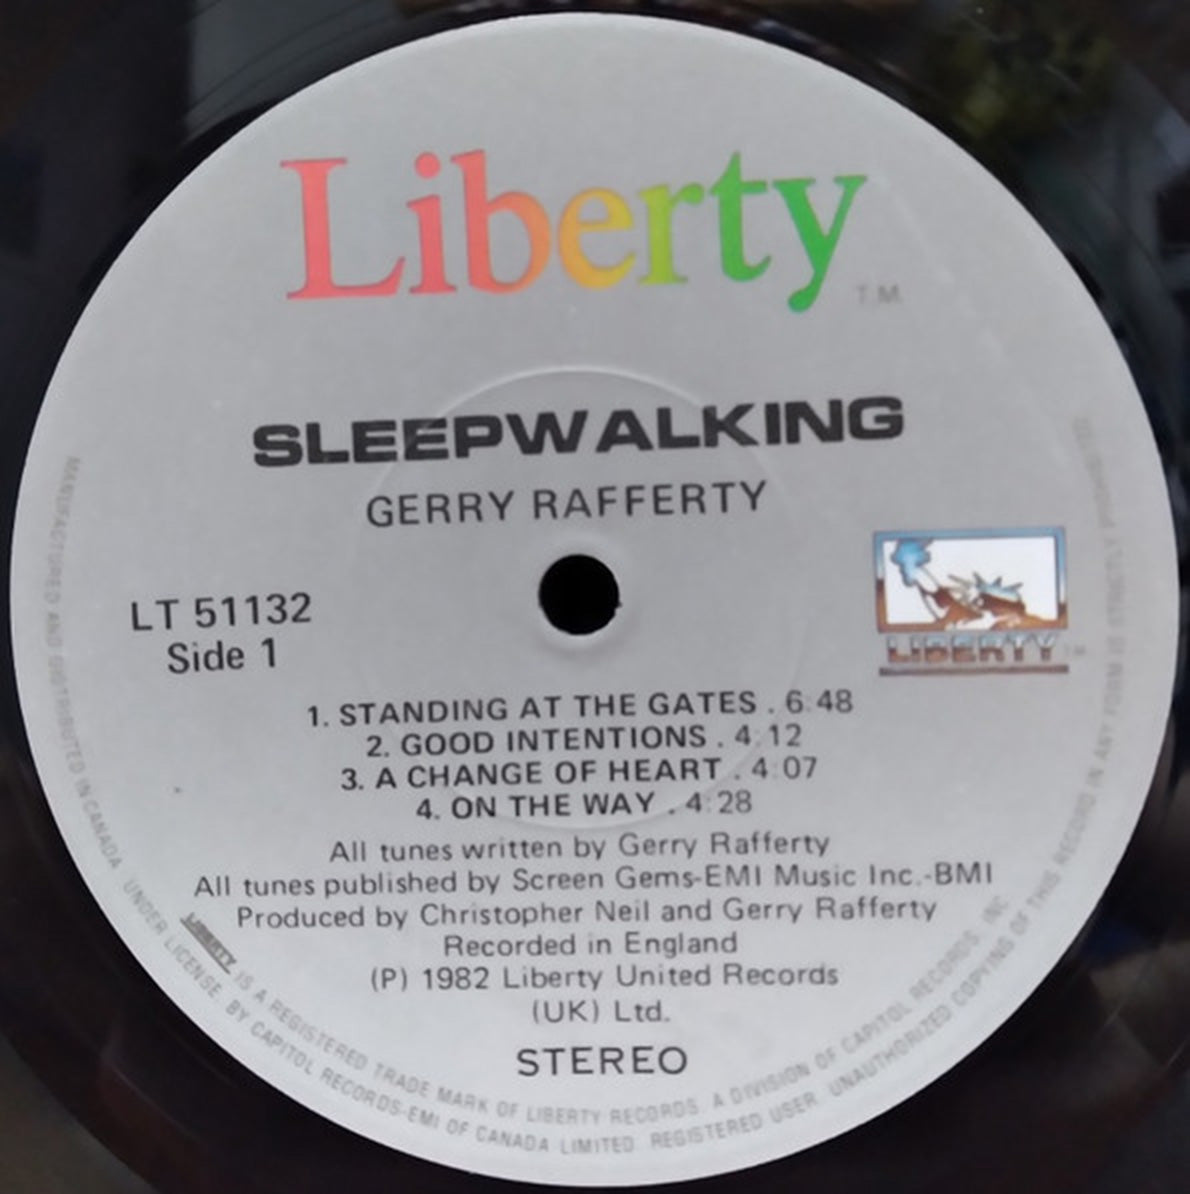 Gerry Rafferty – Sleepwalking - 1982